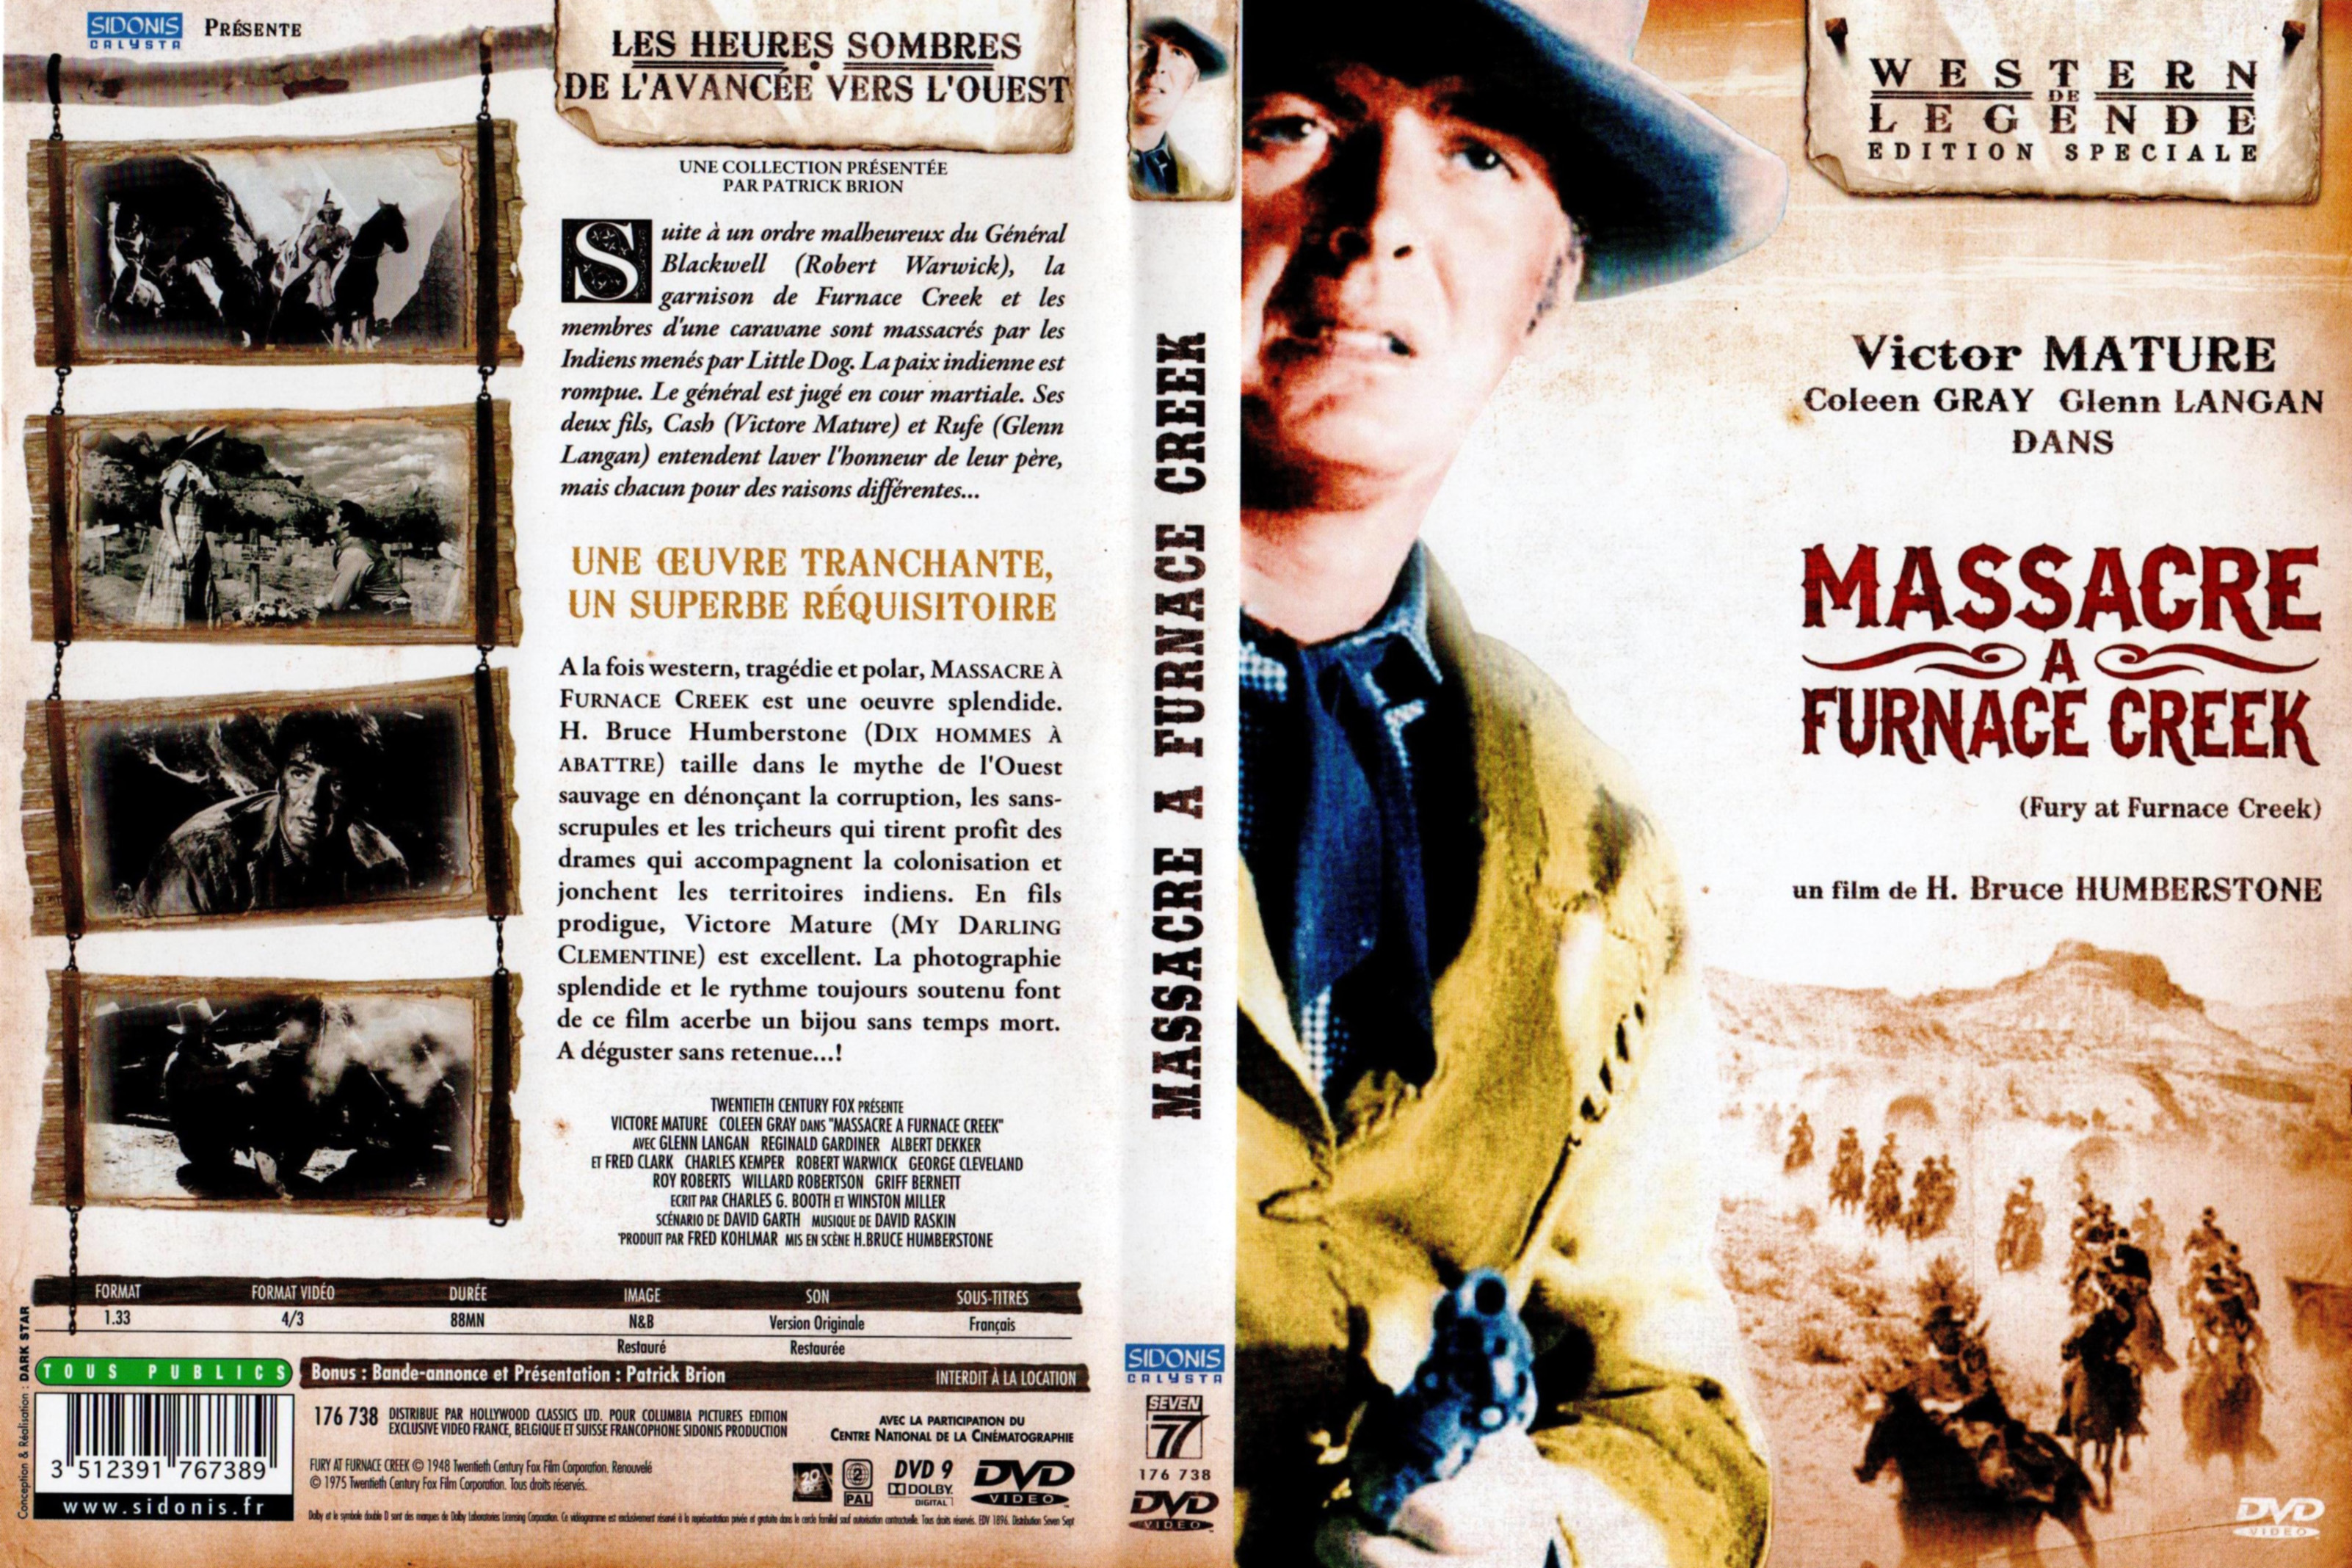 Jaquette DVD Massacre a Furnace Creek